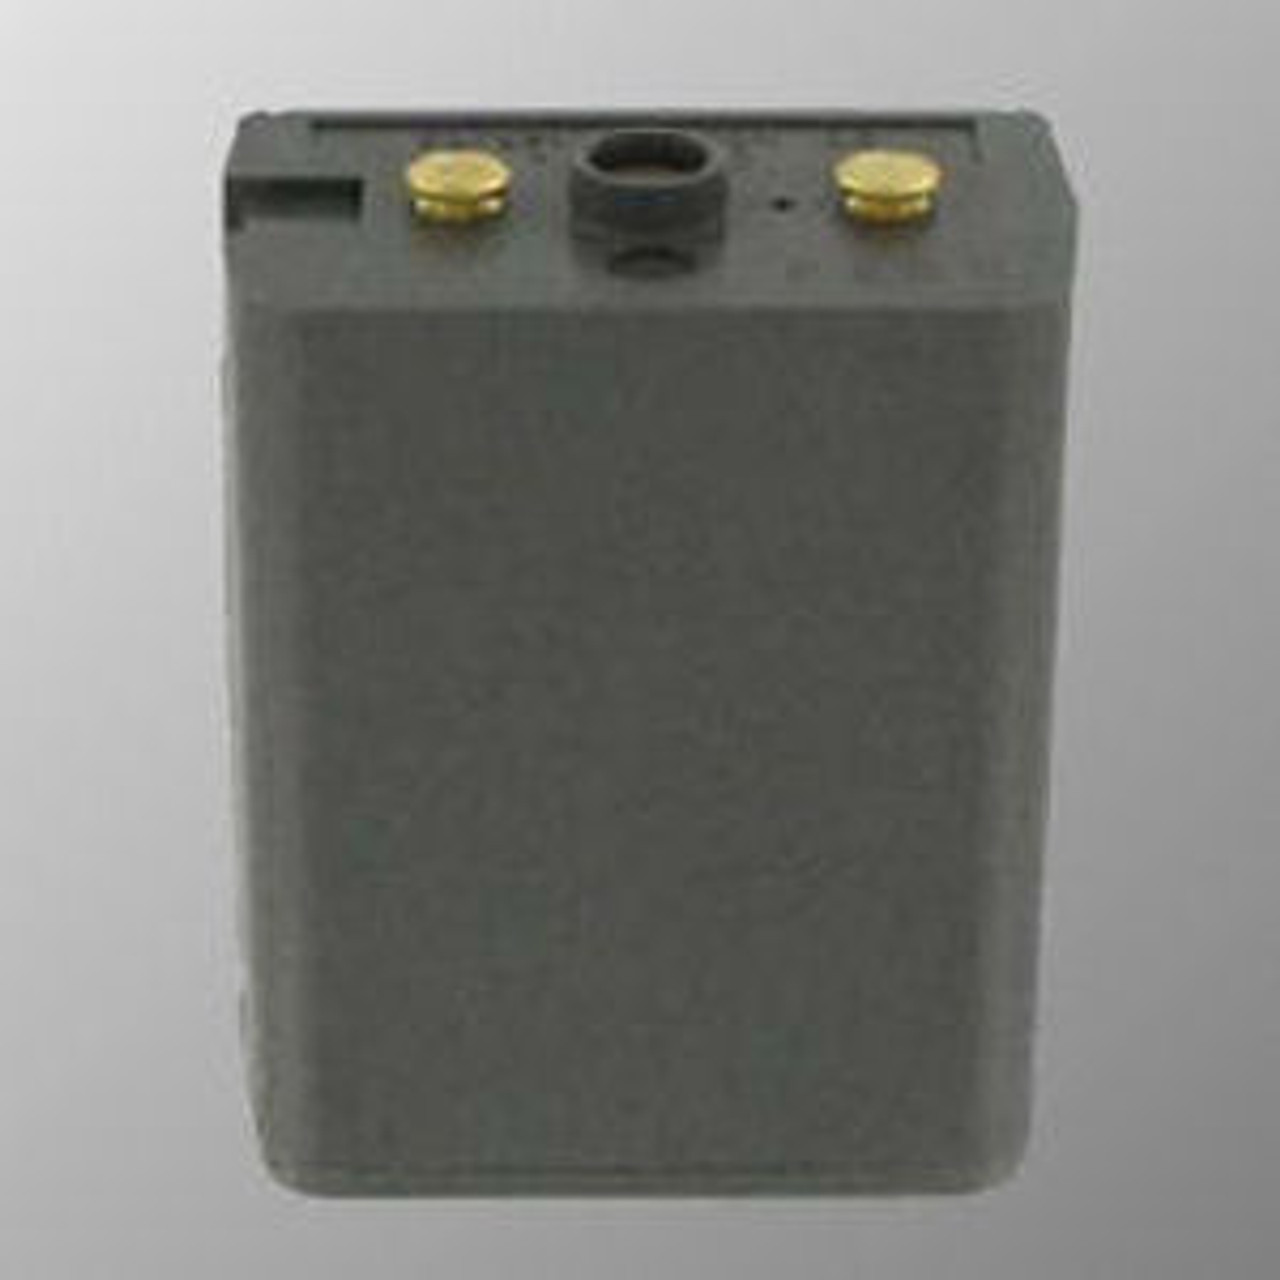 Bendix King LAA0125 Battery Upgrade - 2500mAh Ni-MH, Gray Case